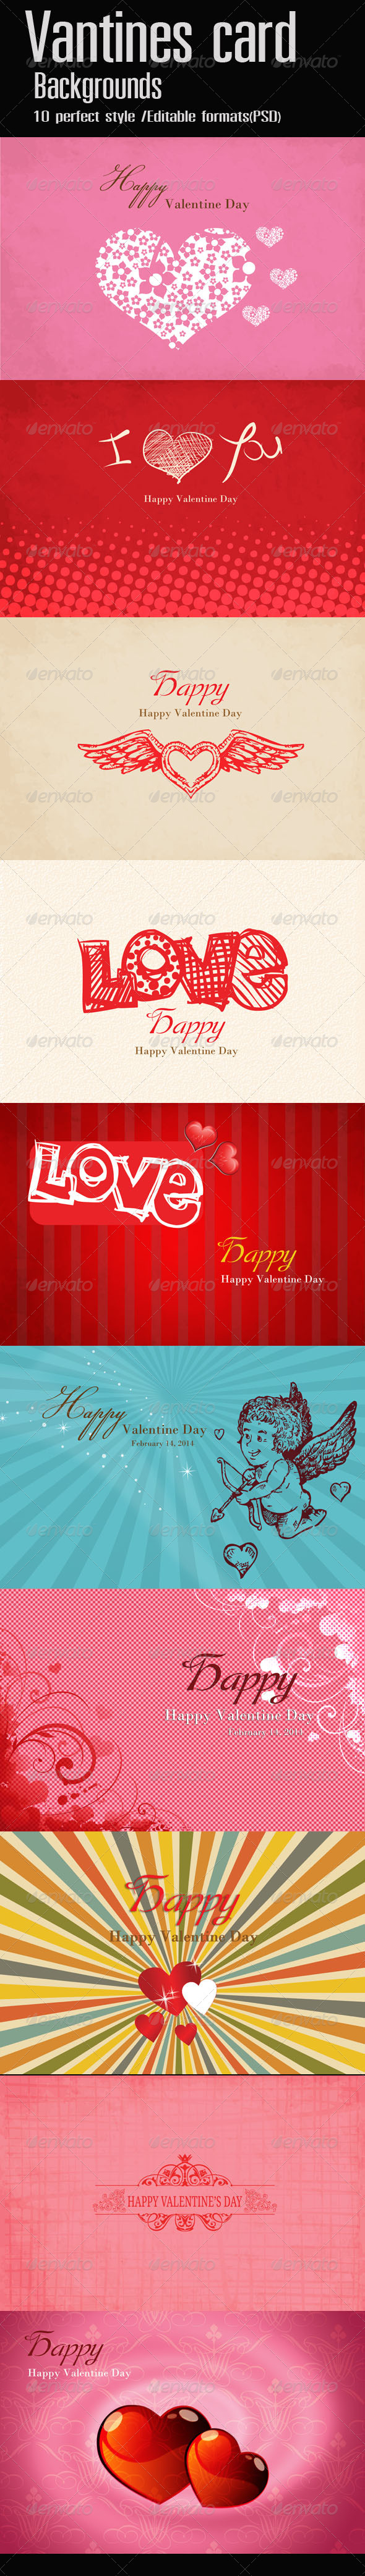 Valentine Card/Backgrounds